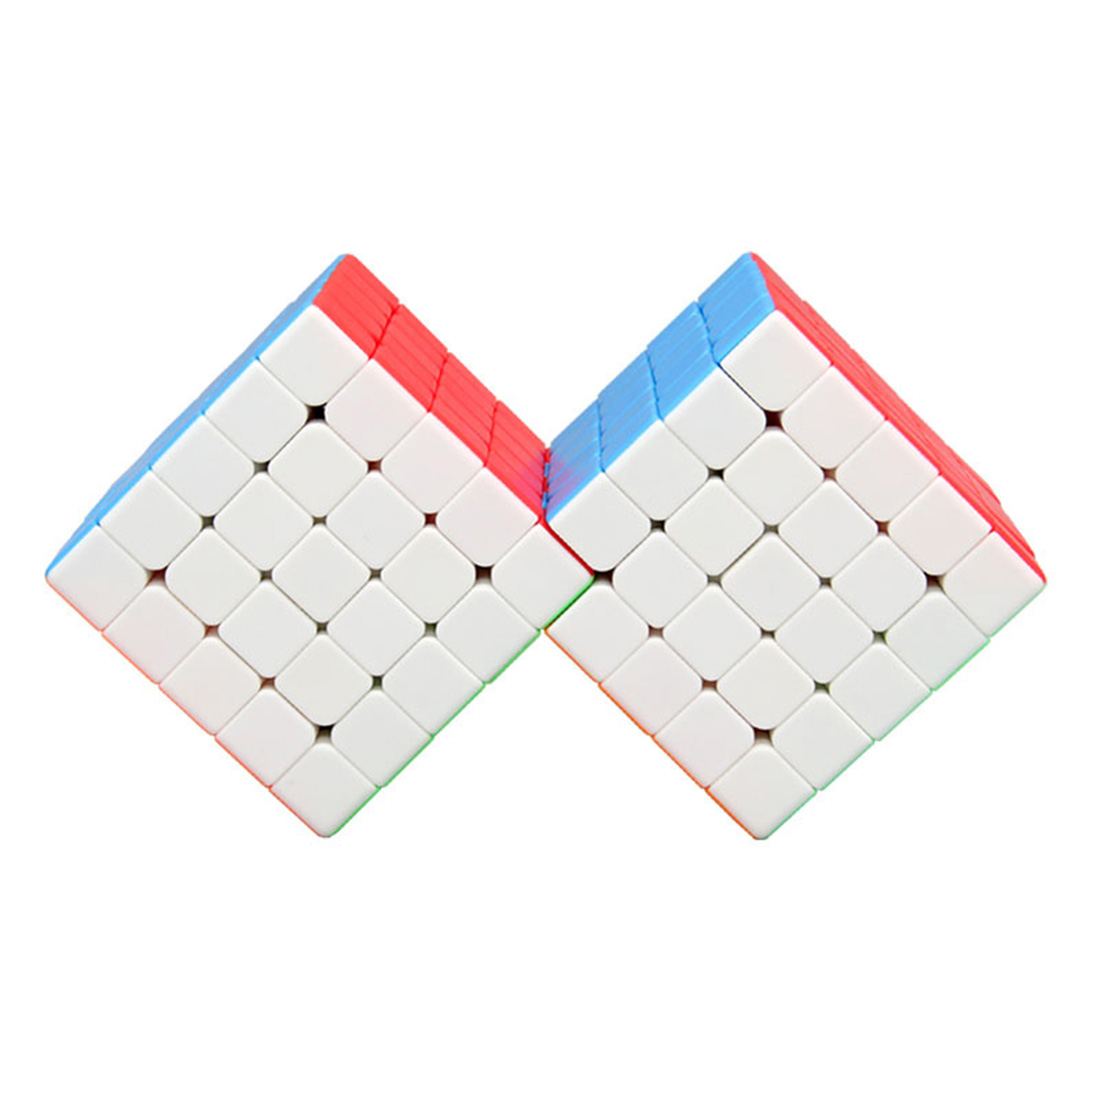 WitEden 5x5 Double Magic Cube 